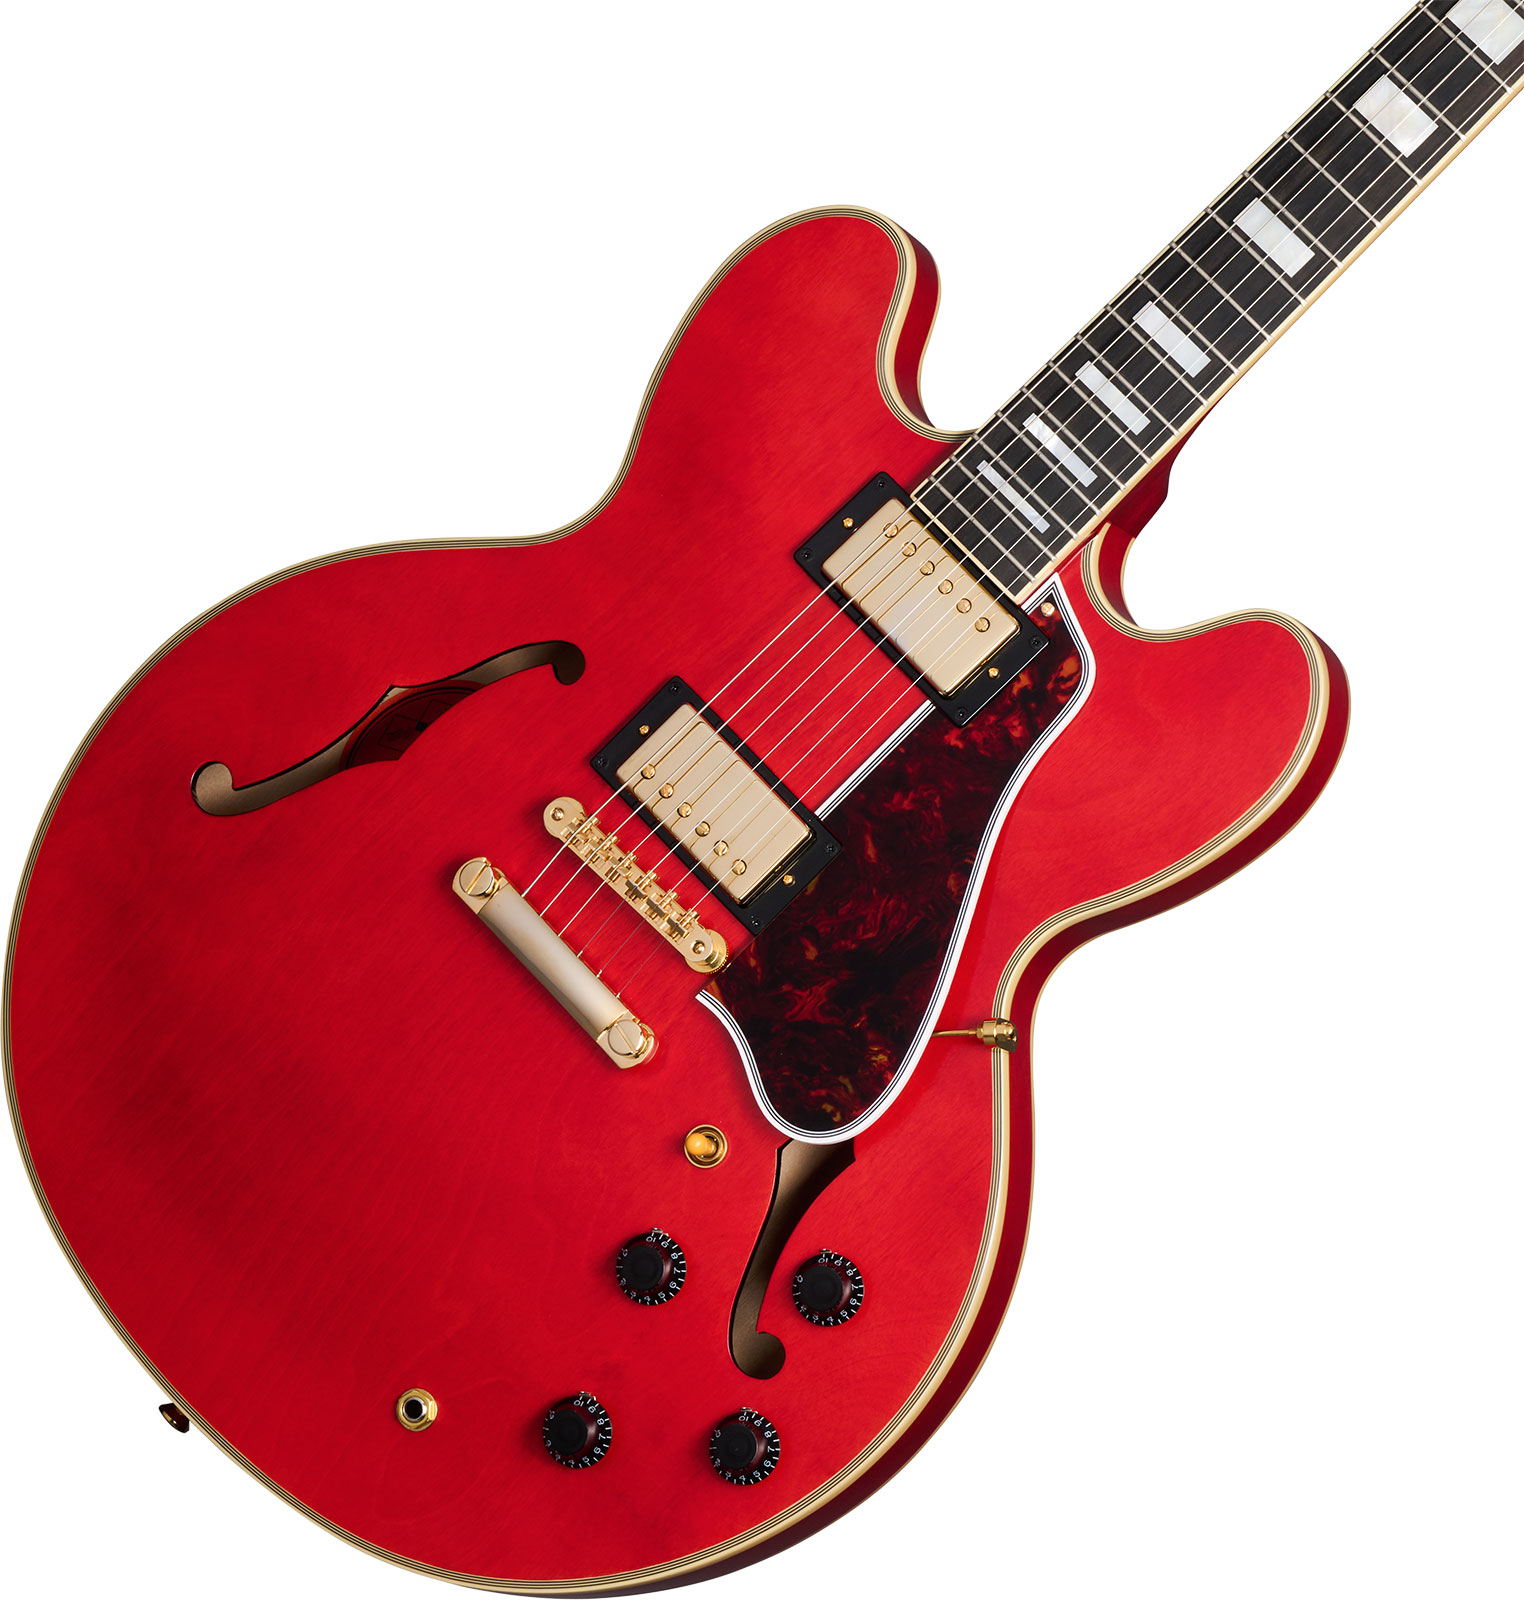 Epiphone Es355 1959 Inspired By 2h Gibson Ht Eb - Vos Cherry Red - Semi hollow elektriche gitaar - Variation 3